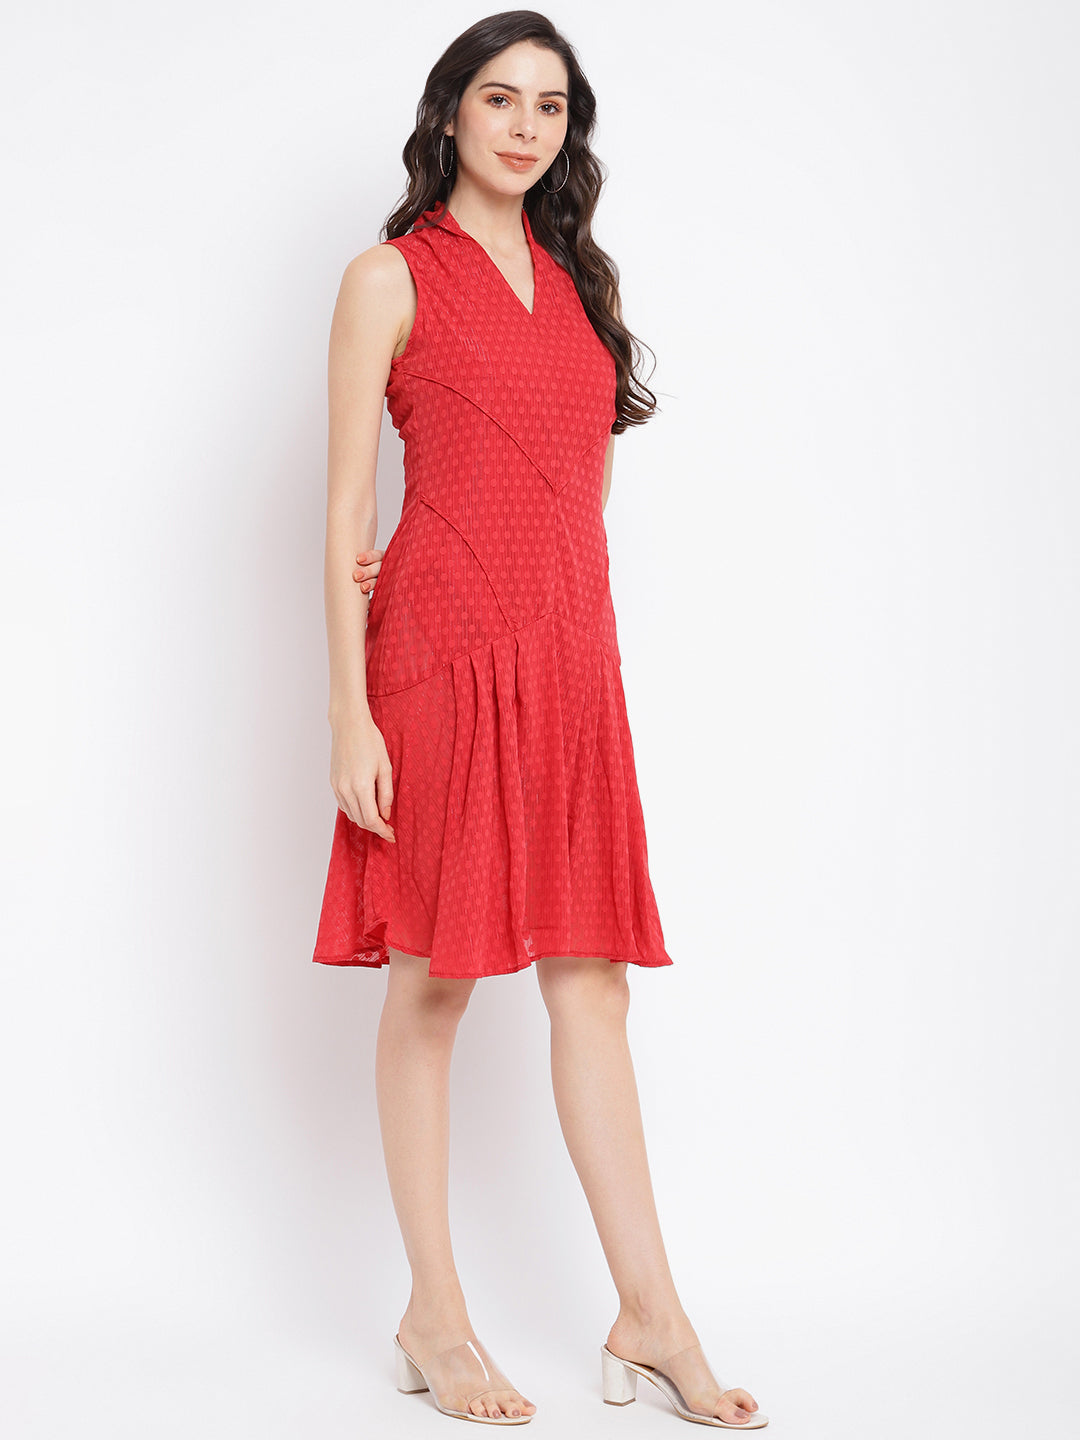 Red Sleeveless A-Line Dress